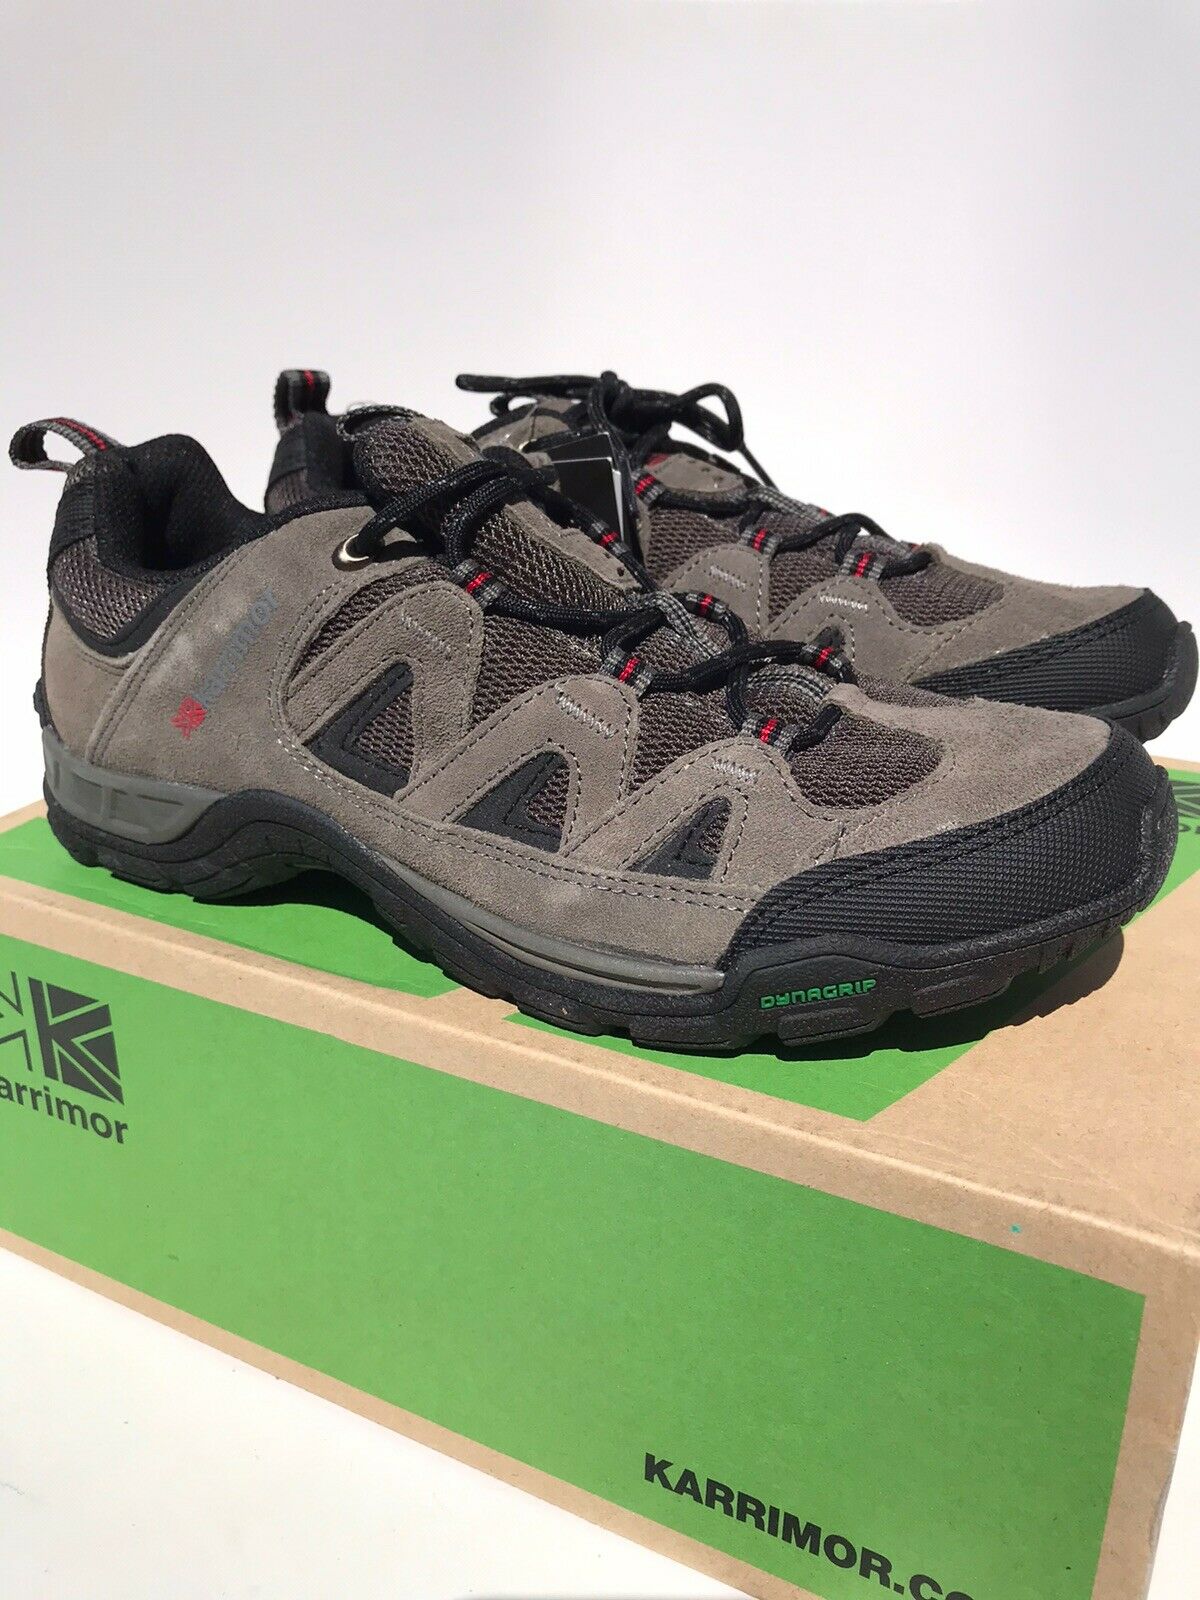 Karrimor Summit Men’s Walking Shoes Charcoal (Size 9.5)